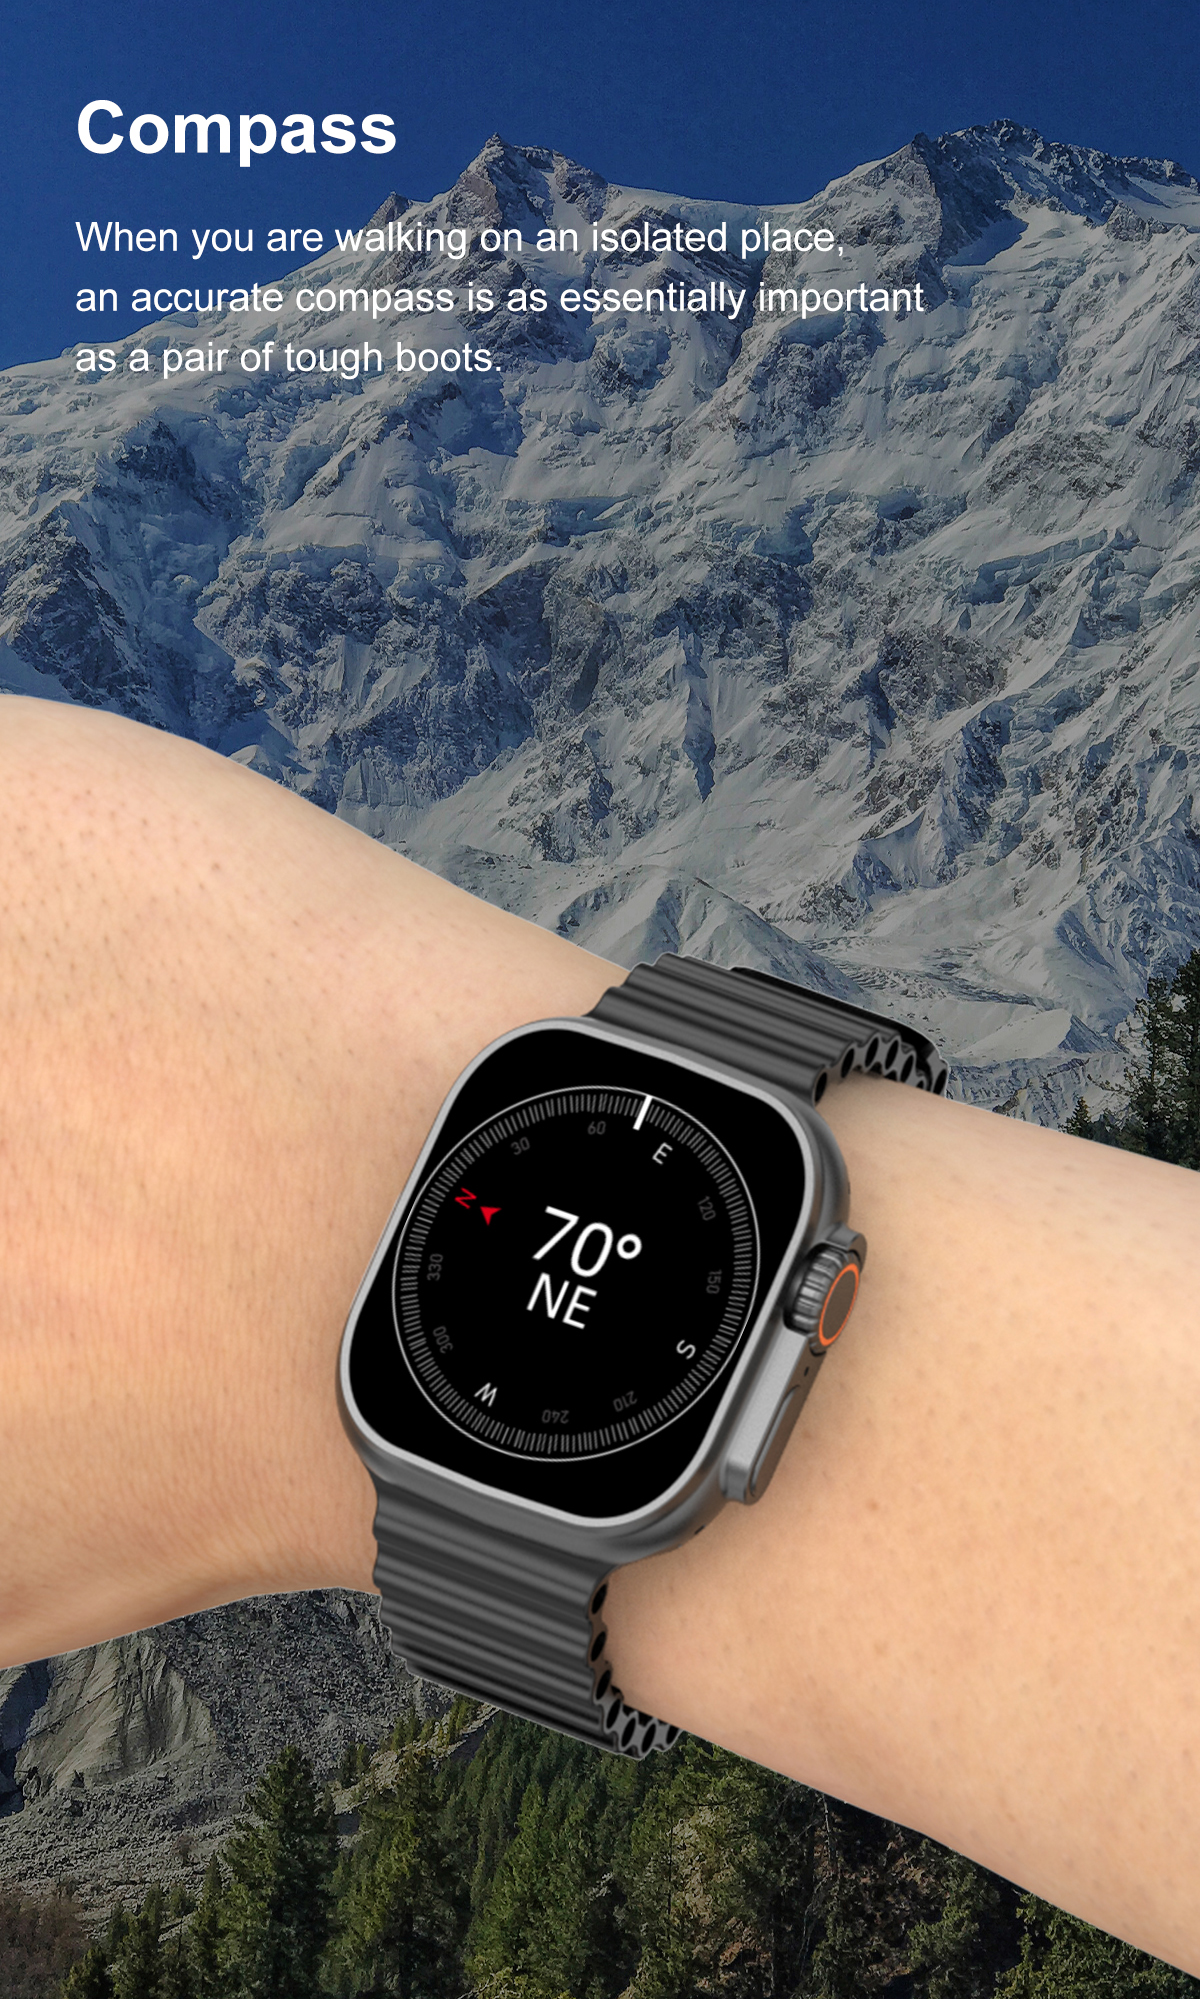 Ceas Smartwatch XK Fitness Ultra Max cu Functii monitorizare sanatate, Memento sedentar, Senzor puls, Pedometru, Notificari, Contacte, Cadran gri